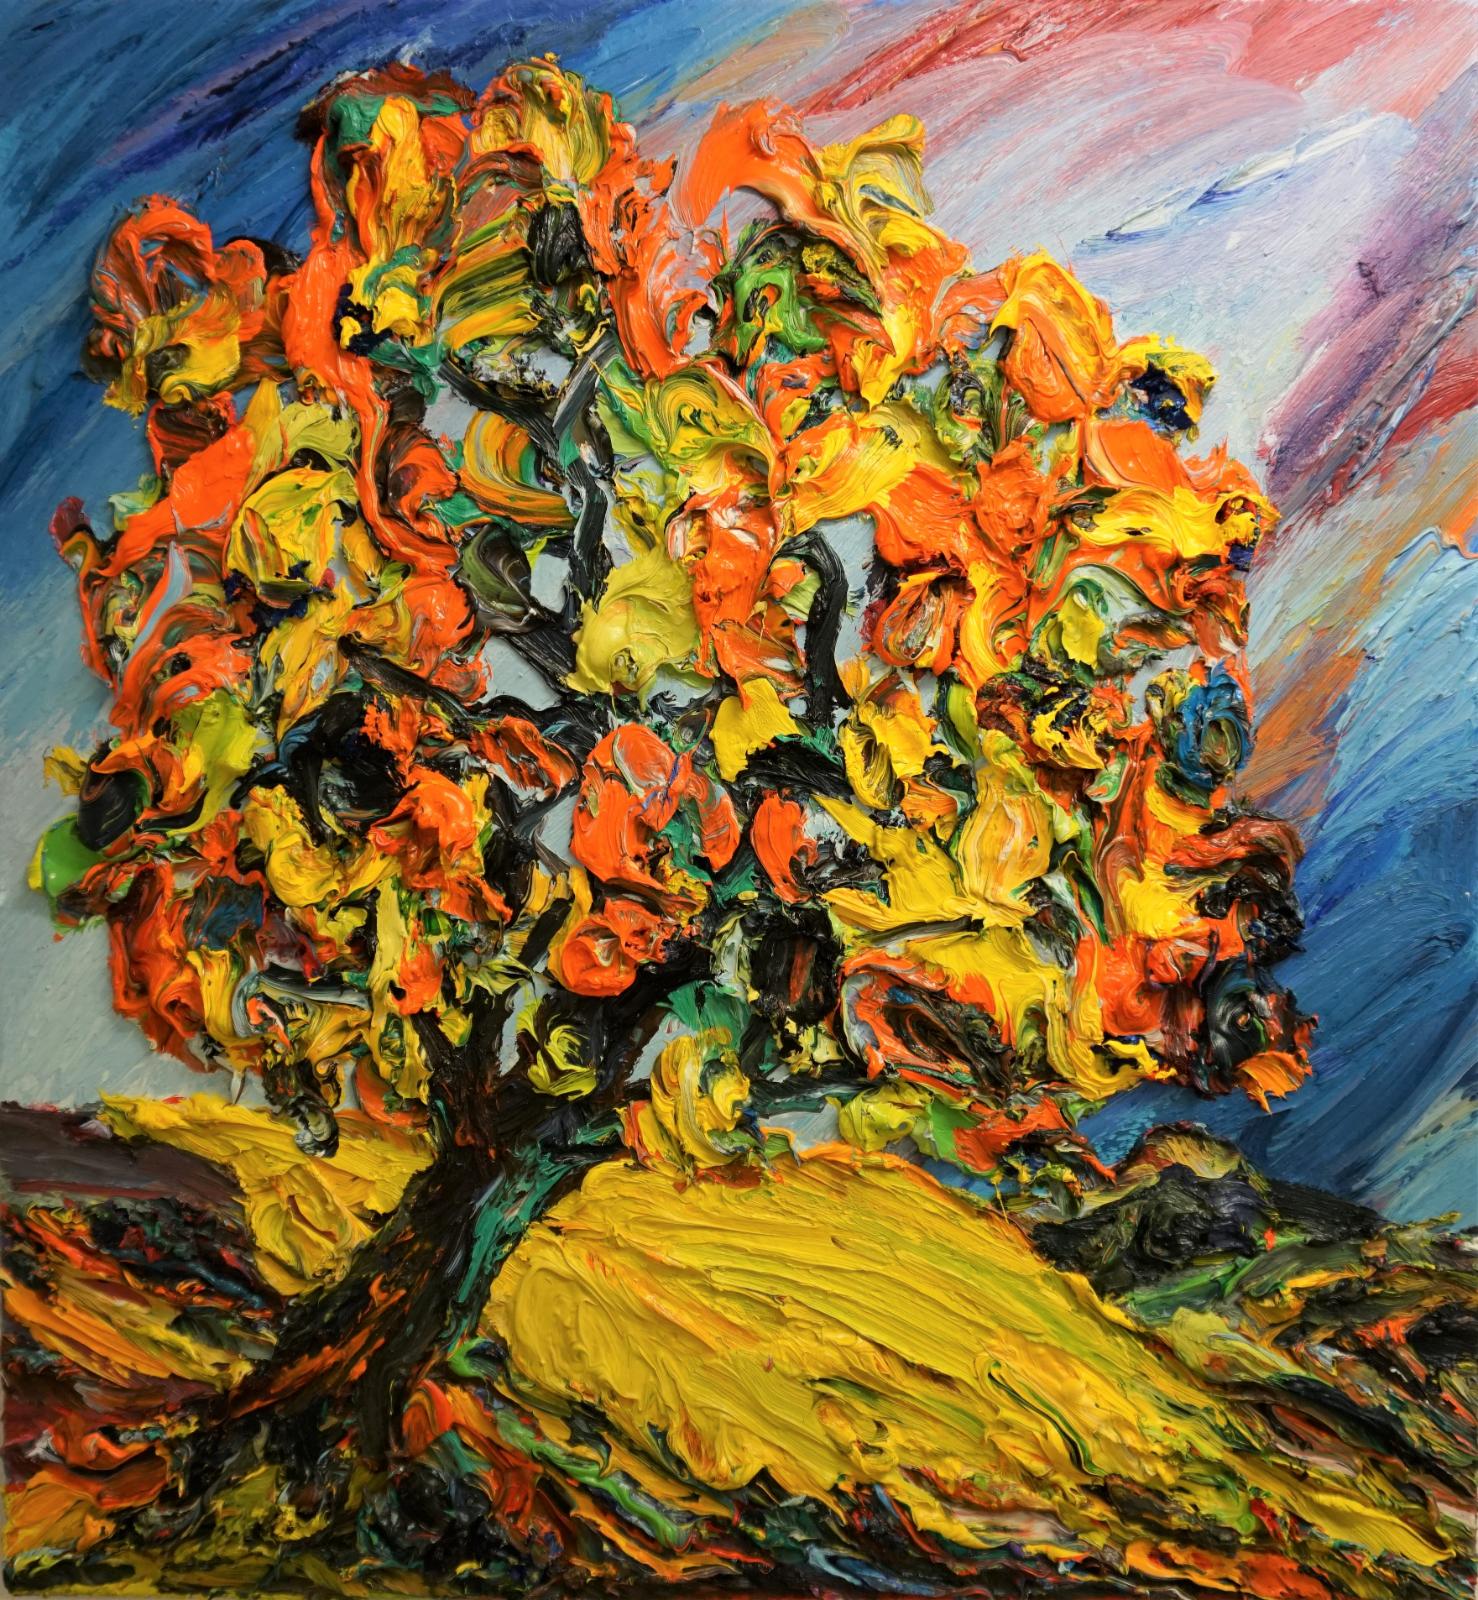 Harry Meyer, Baum, 2020, Öl auf Leinwand, 75 x 70 cm, Preis auf Anfrage, mey037ko